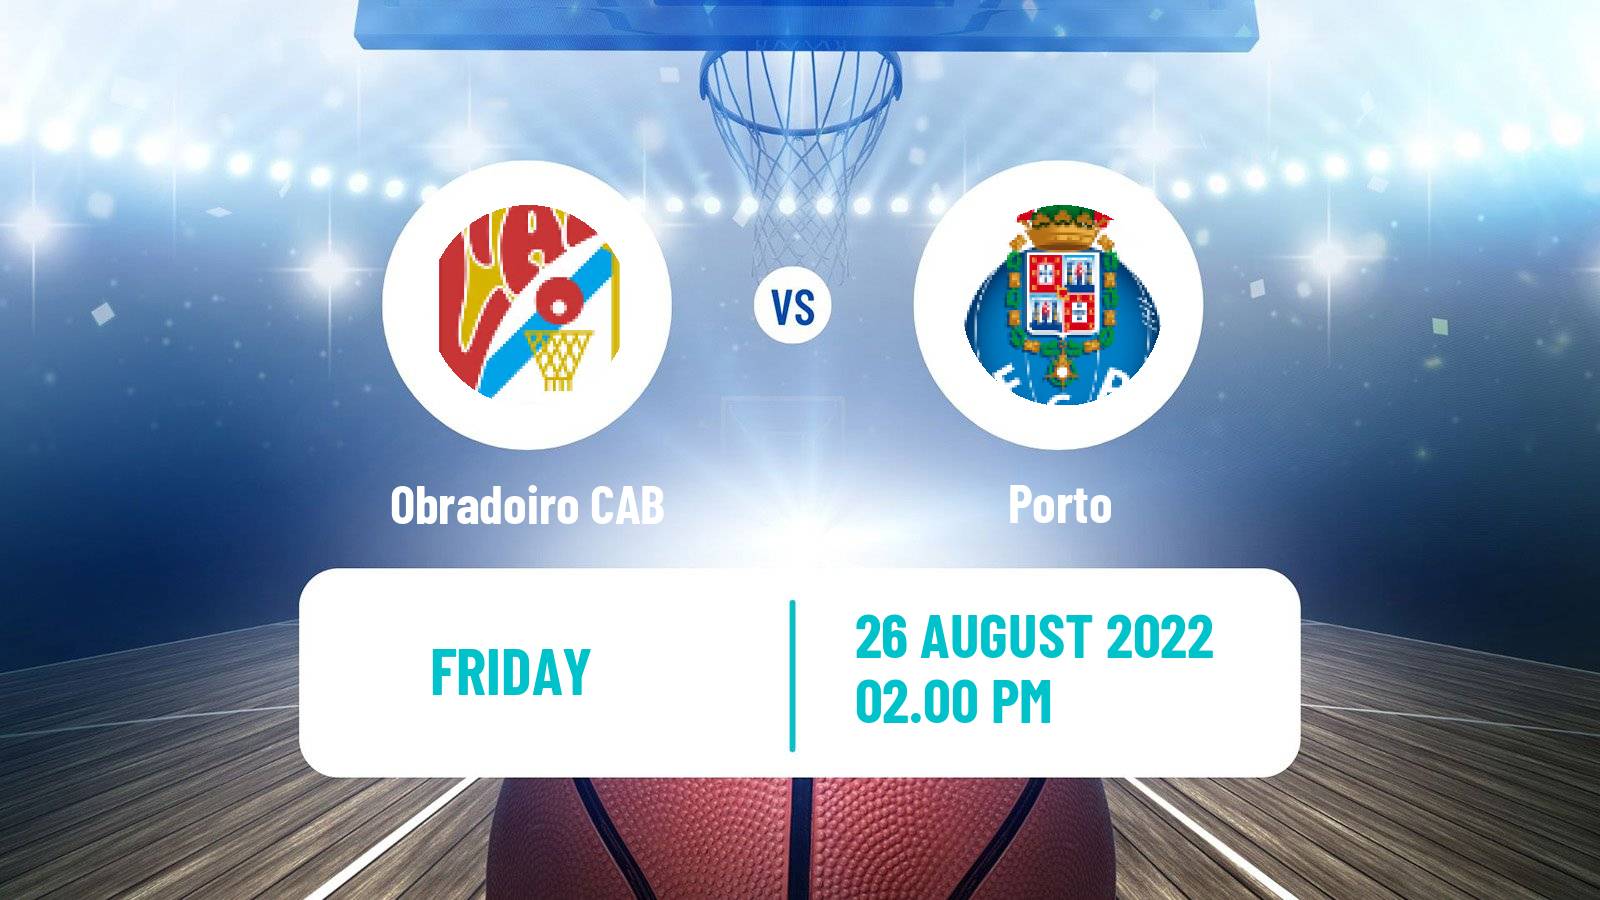 Basketball Club Friendly Basketball Obradoiro CAB - Porto